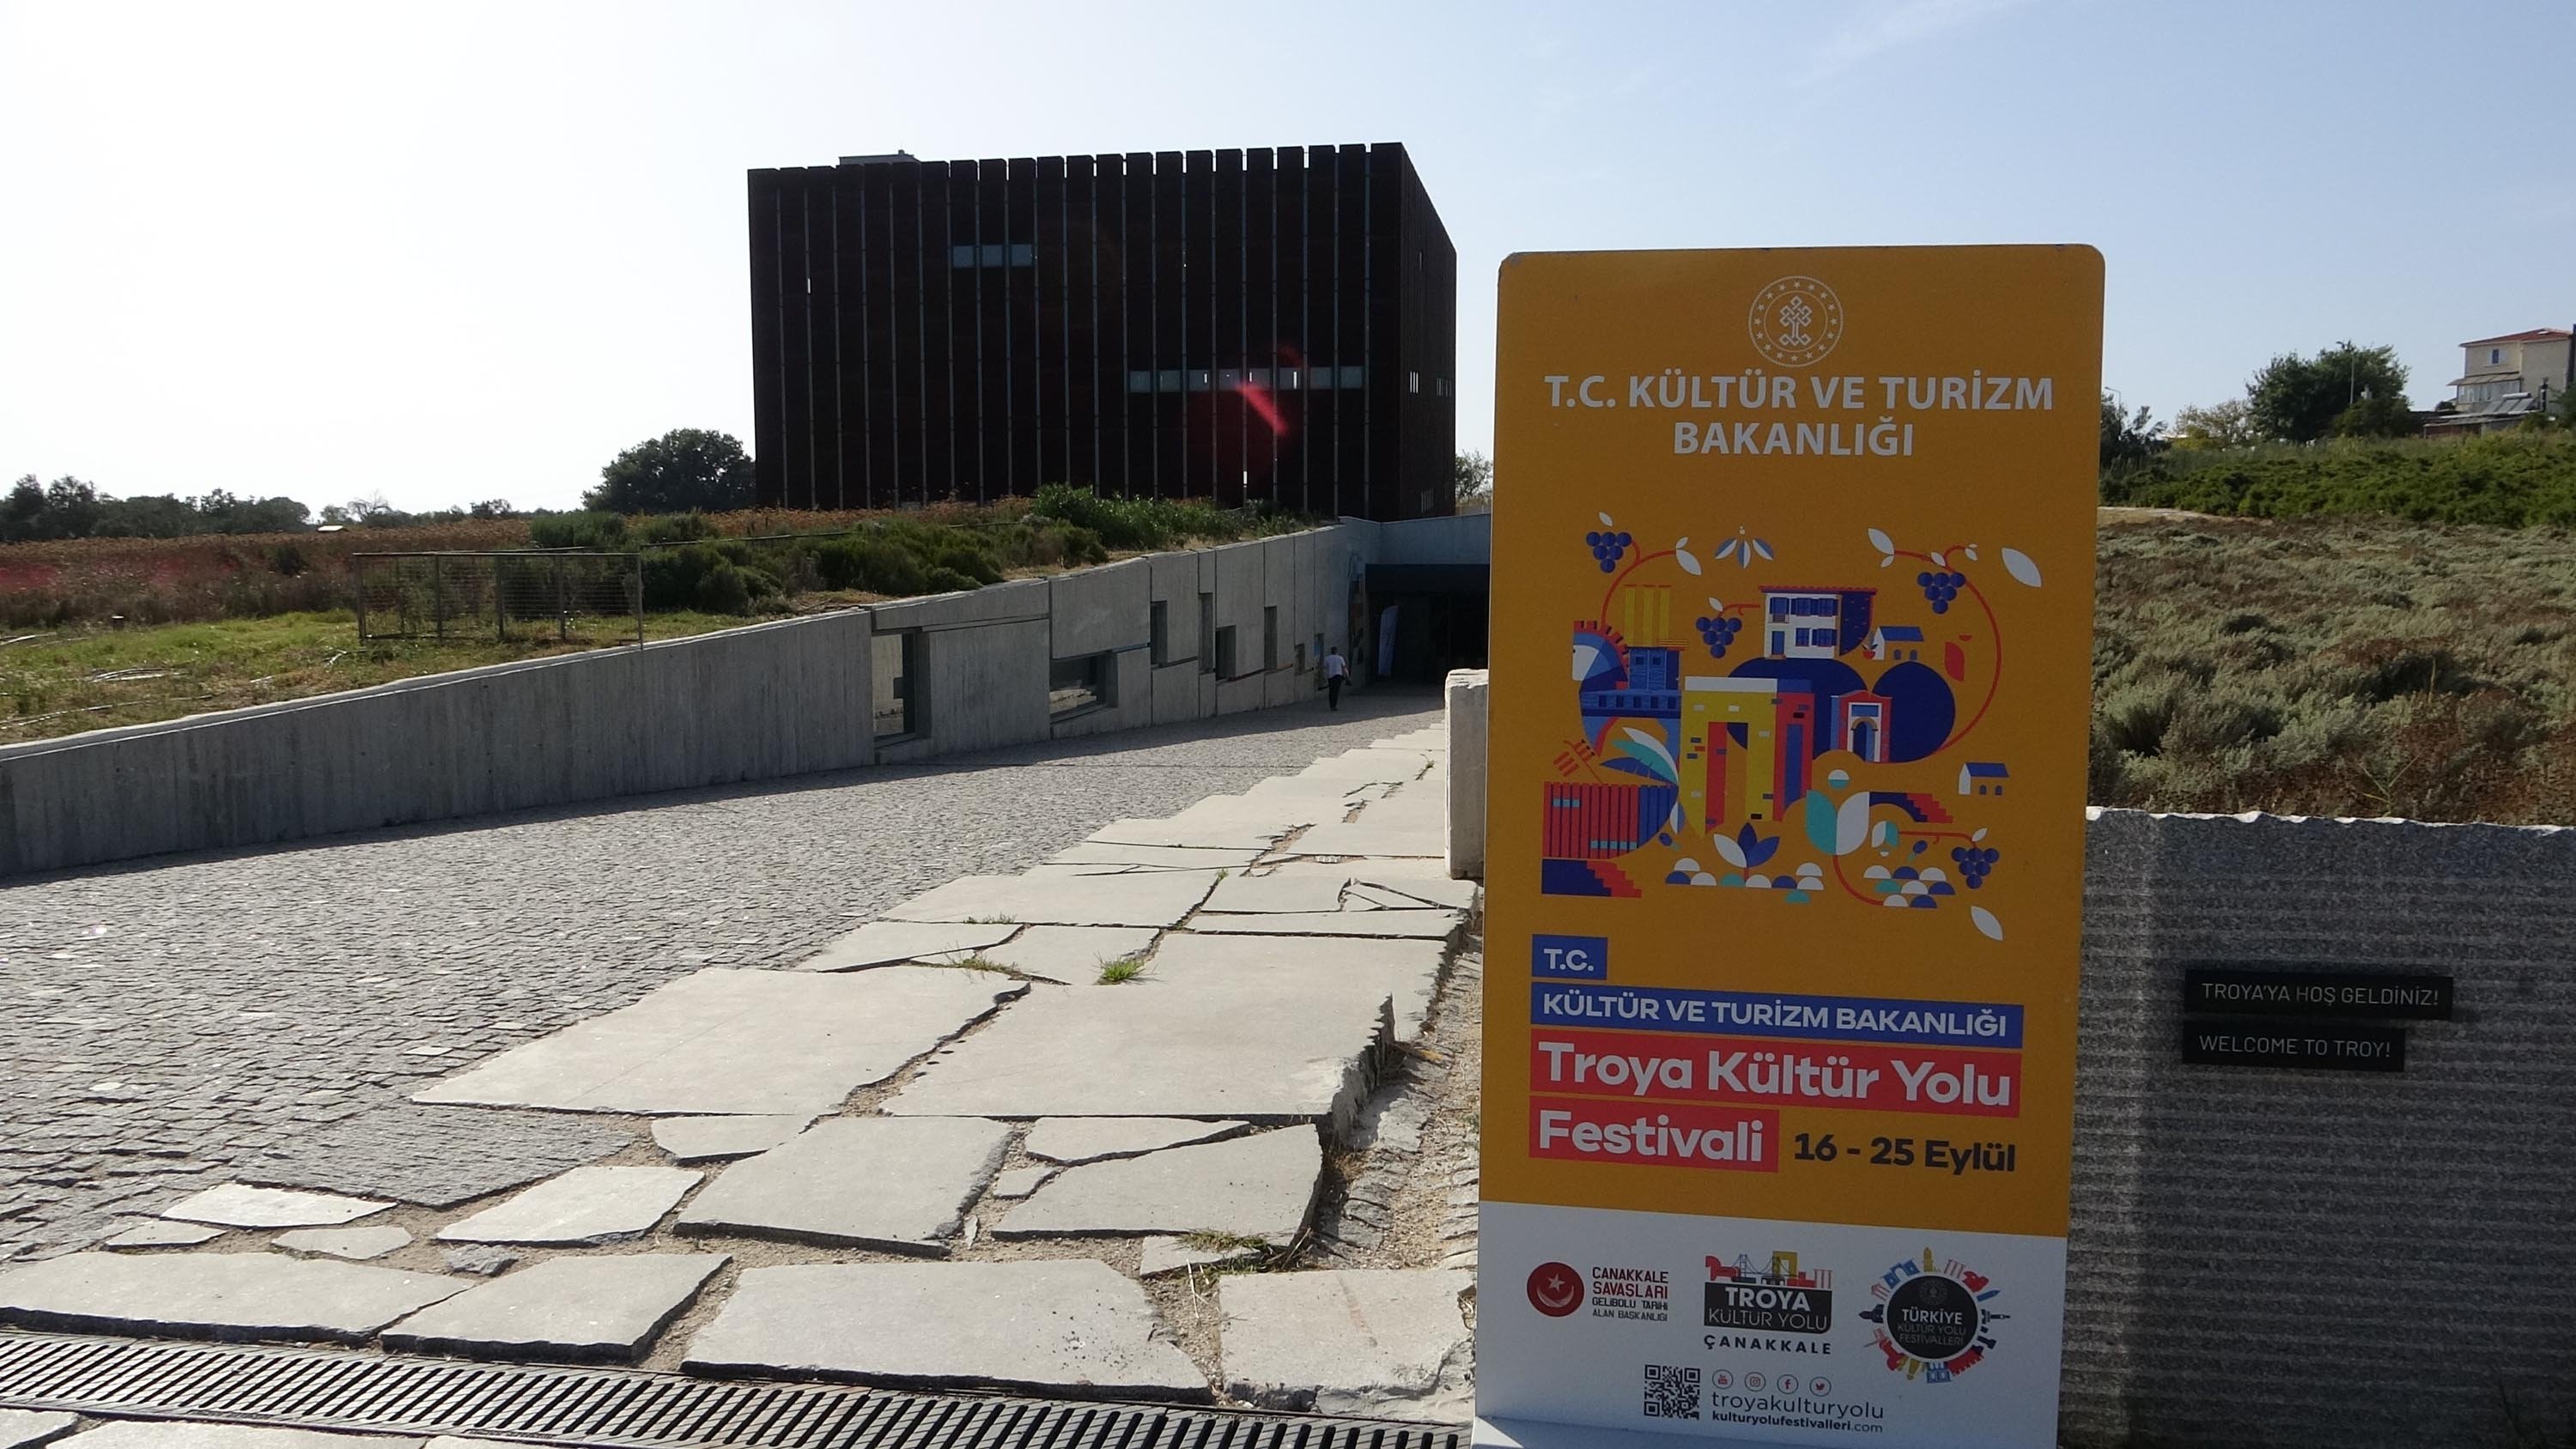 Troy Culture Road Festival launched under the culture road project of the Ministry of Culture and Tourism of Türkiye to revitalize cultural heritage, Çanakkale, Türkiye, Sept. 17, 2022. (DHA Photo)